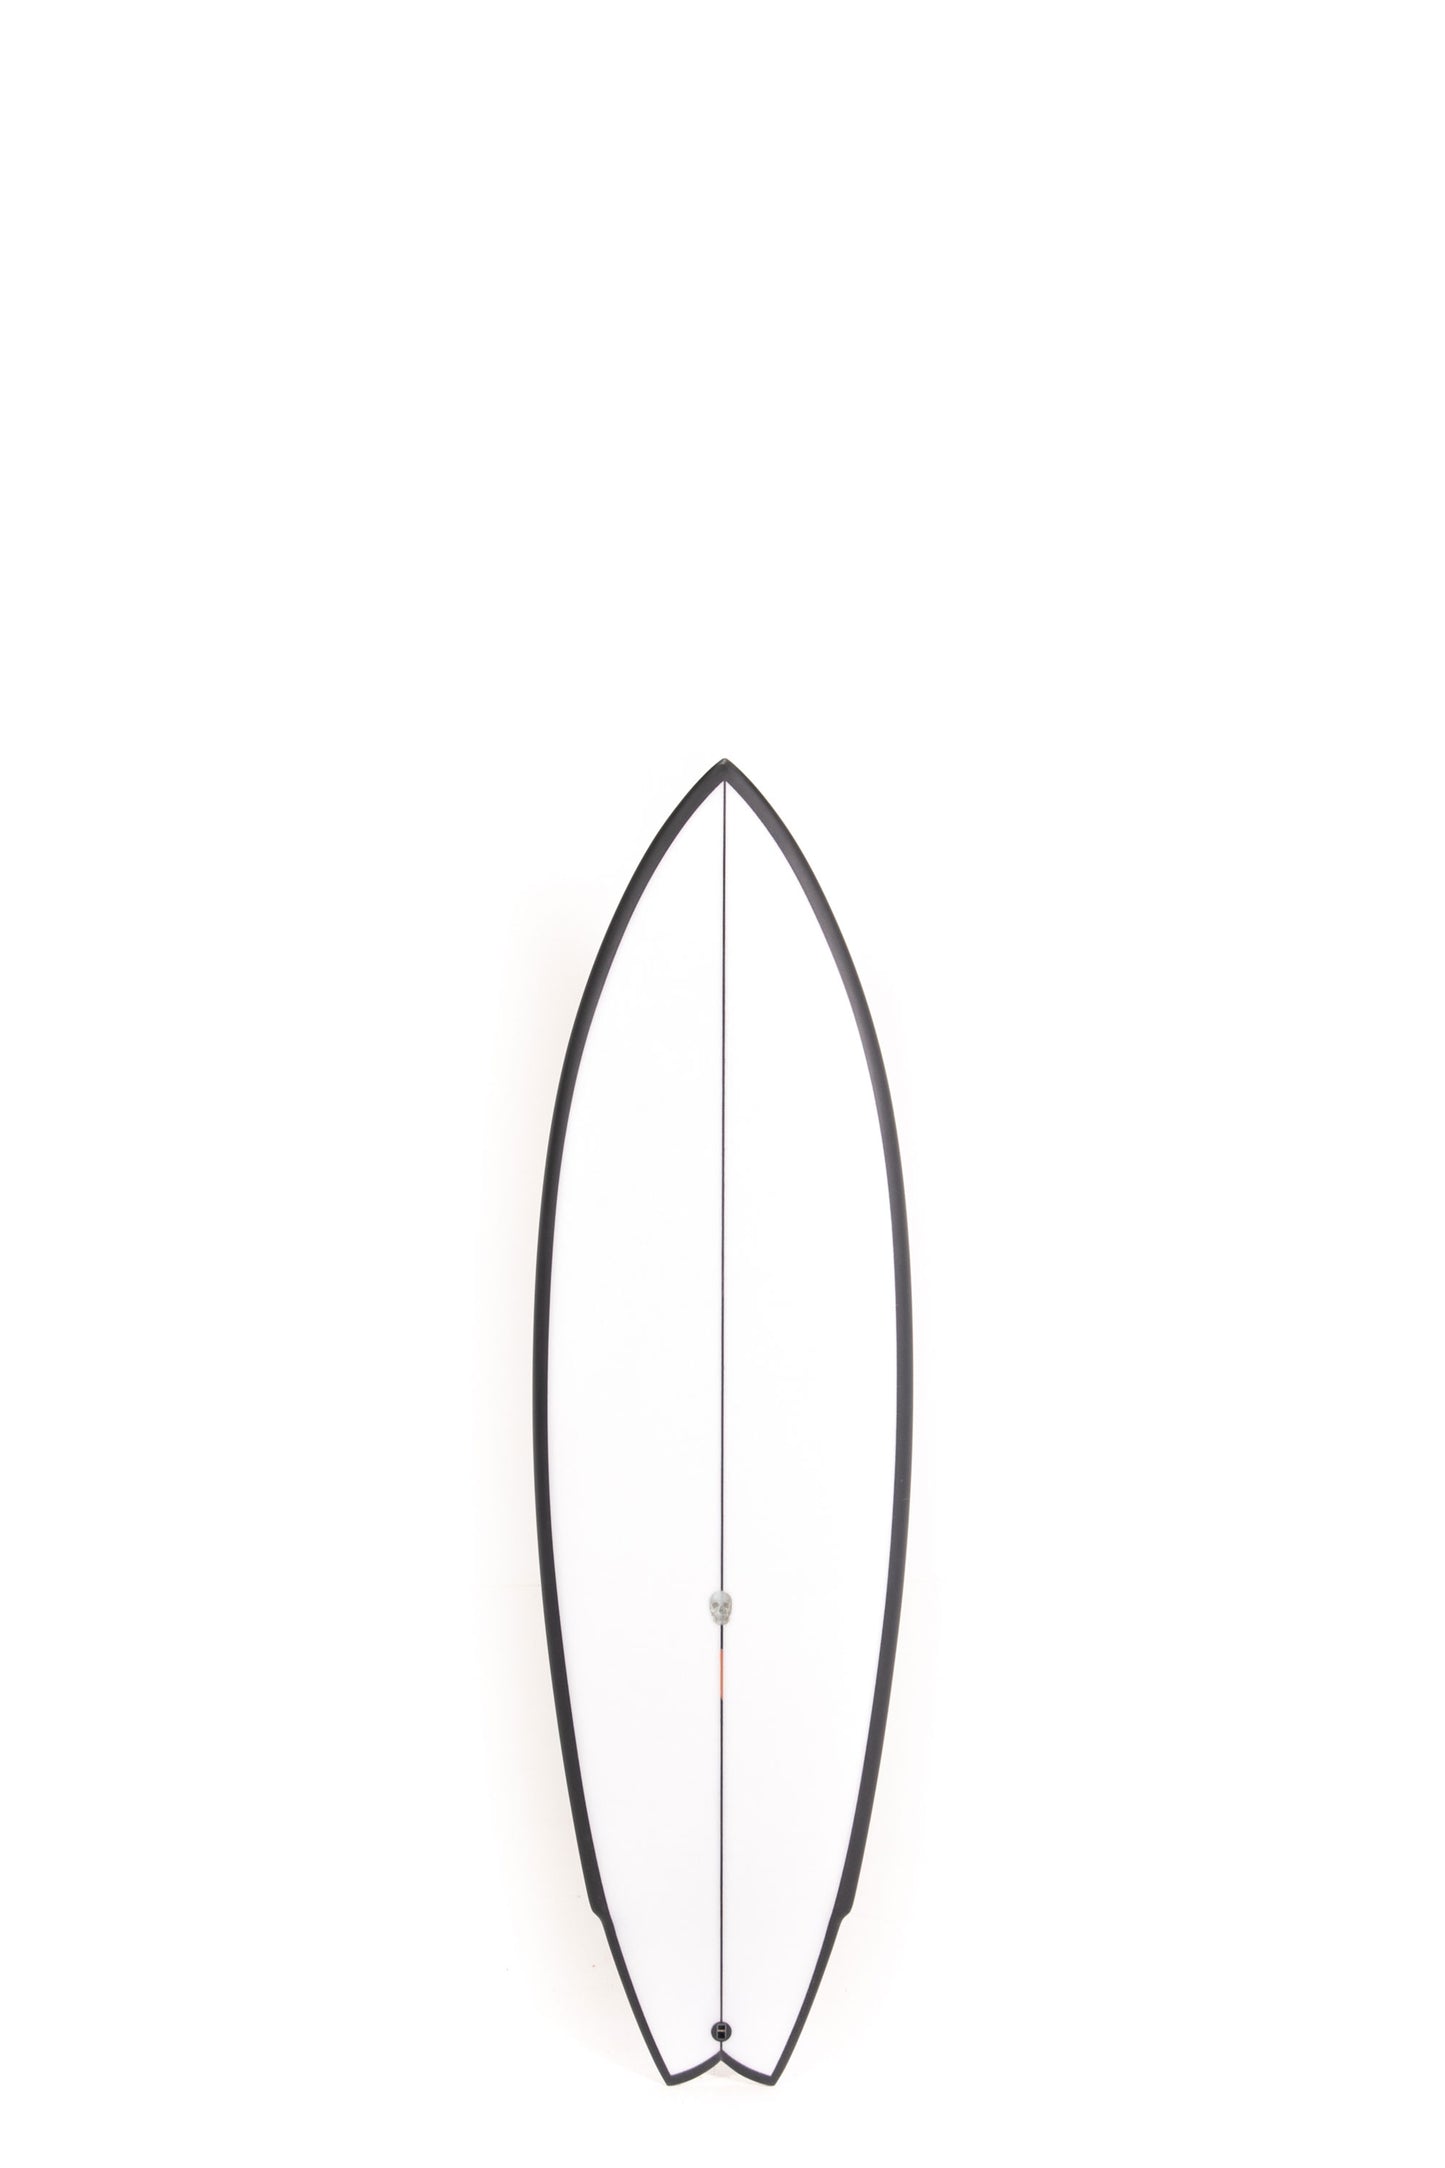 Pukas Surf Shop - Christenson Surfboards - LANE SPLITTER SWALLOW - 5'8" x 19 3/4 x 2 9/16 x 31,12L - CX05817